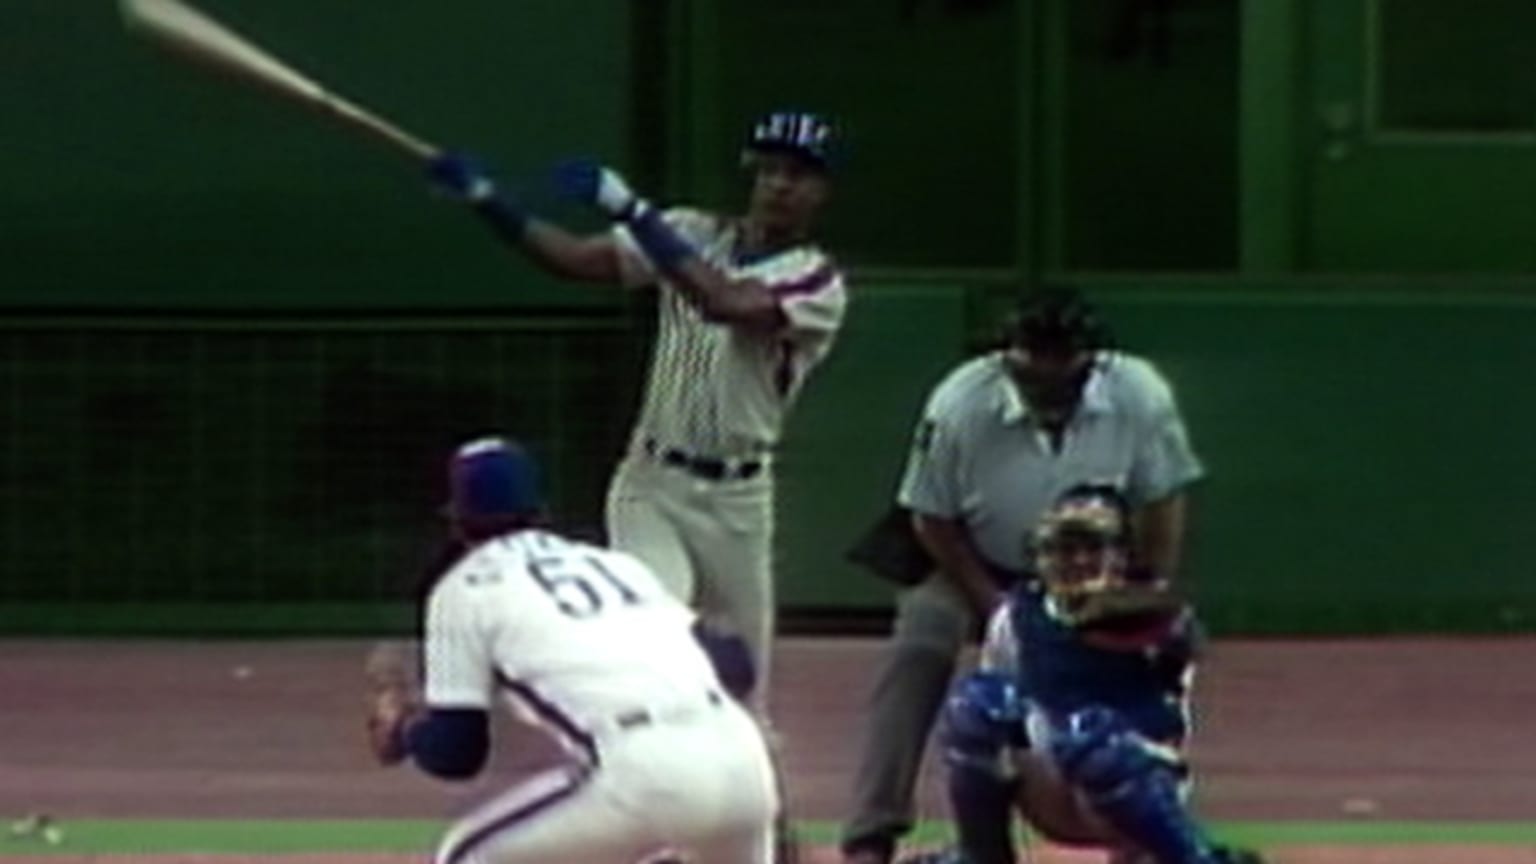 Darryl Strawberry Slow Motion Home Run Baseball Swing Hitting Mechanics  Video 